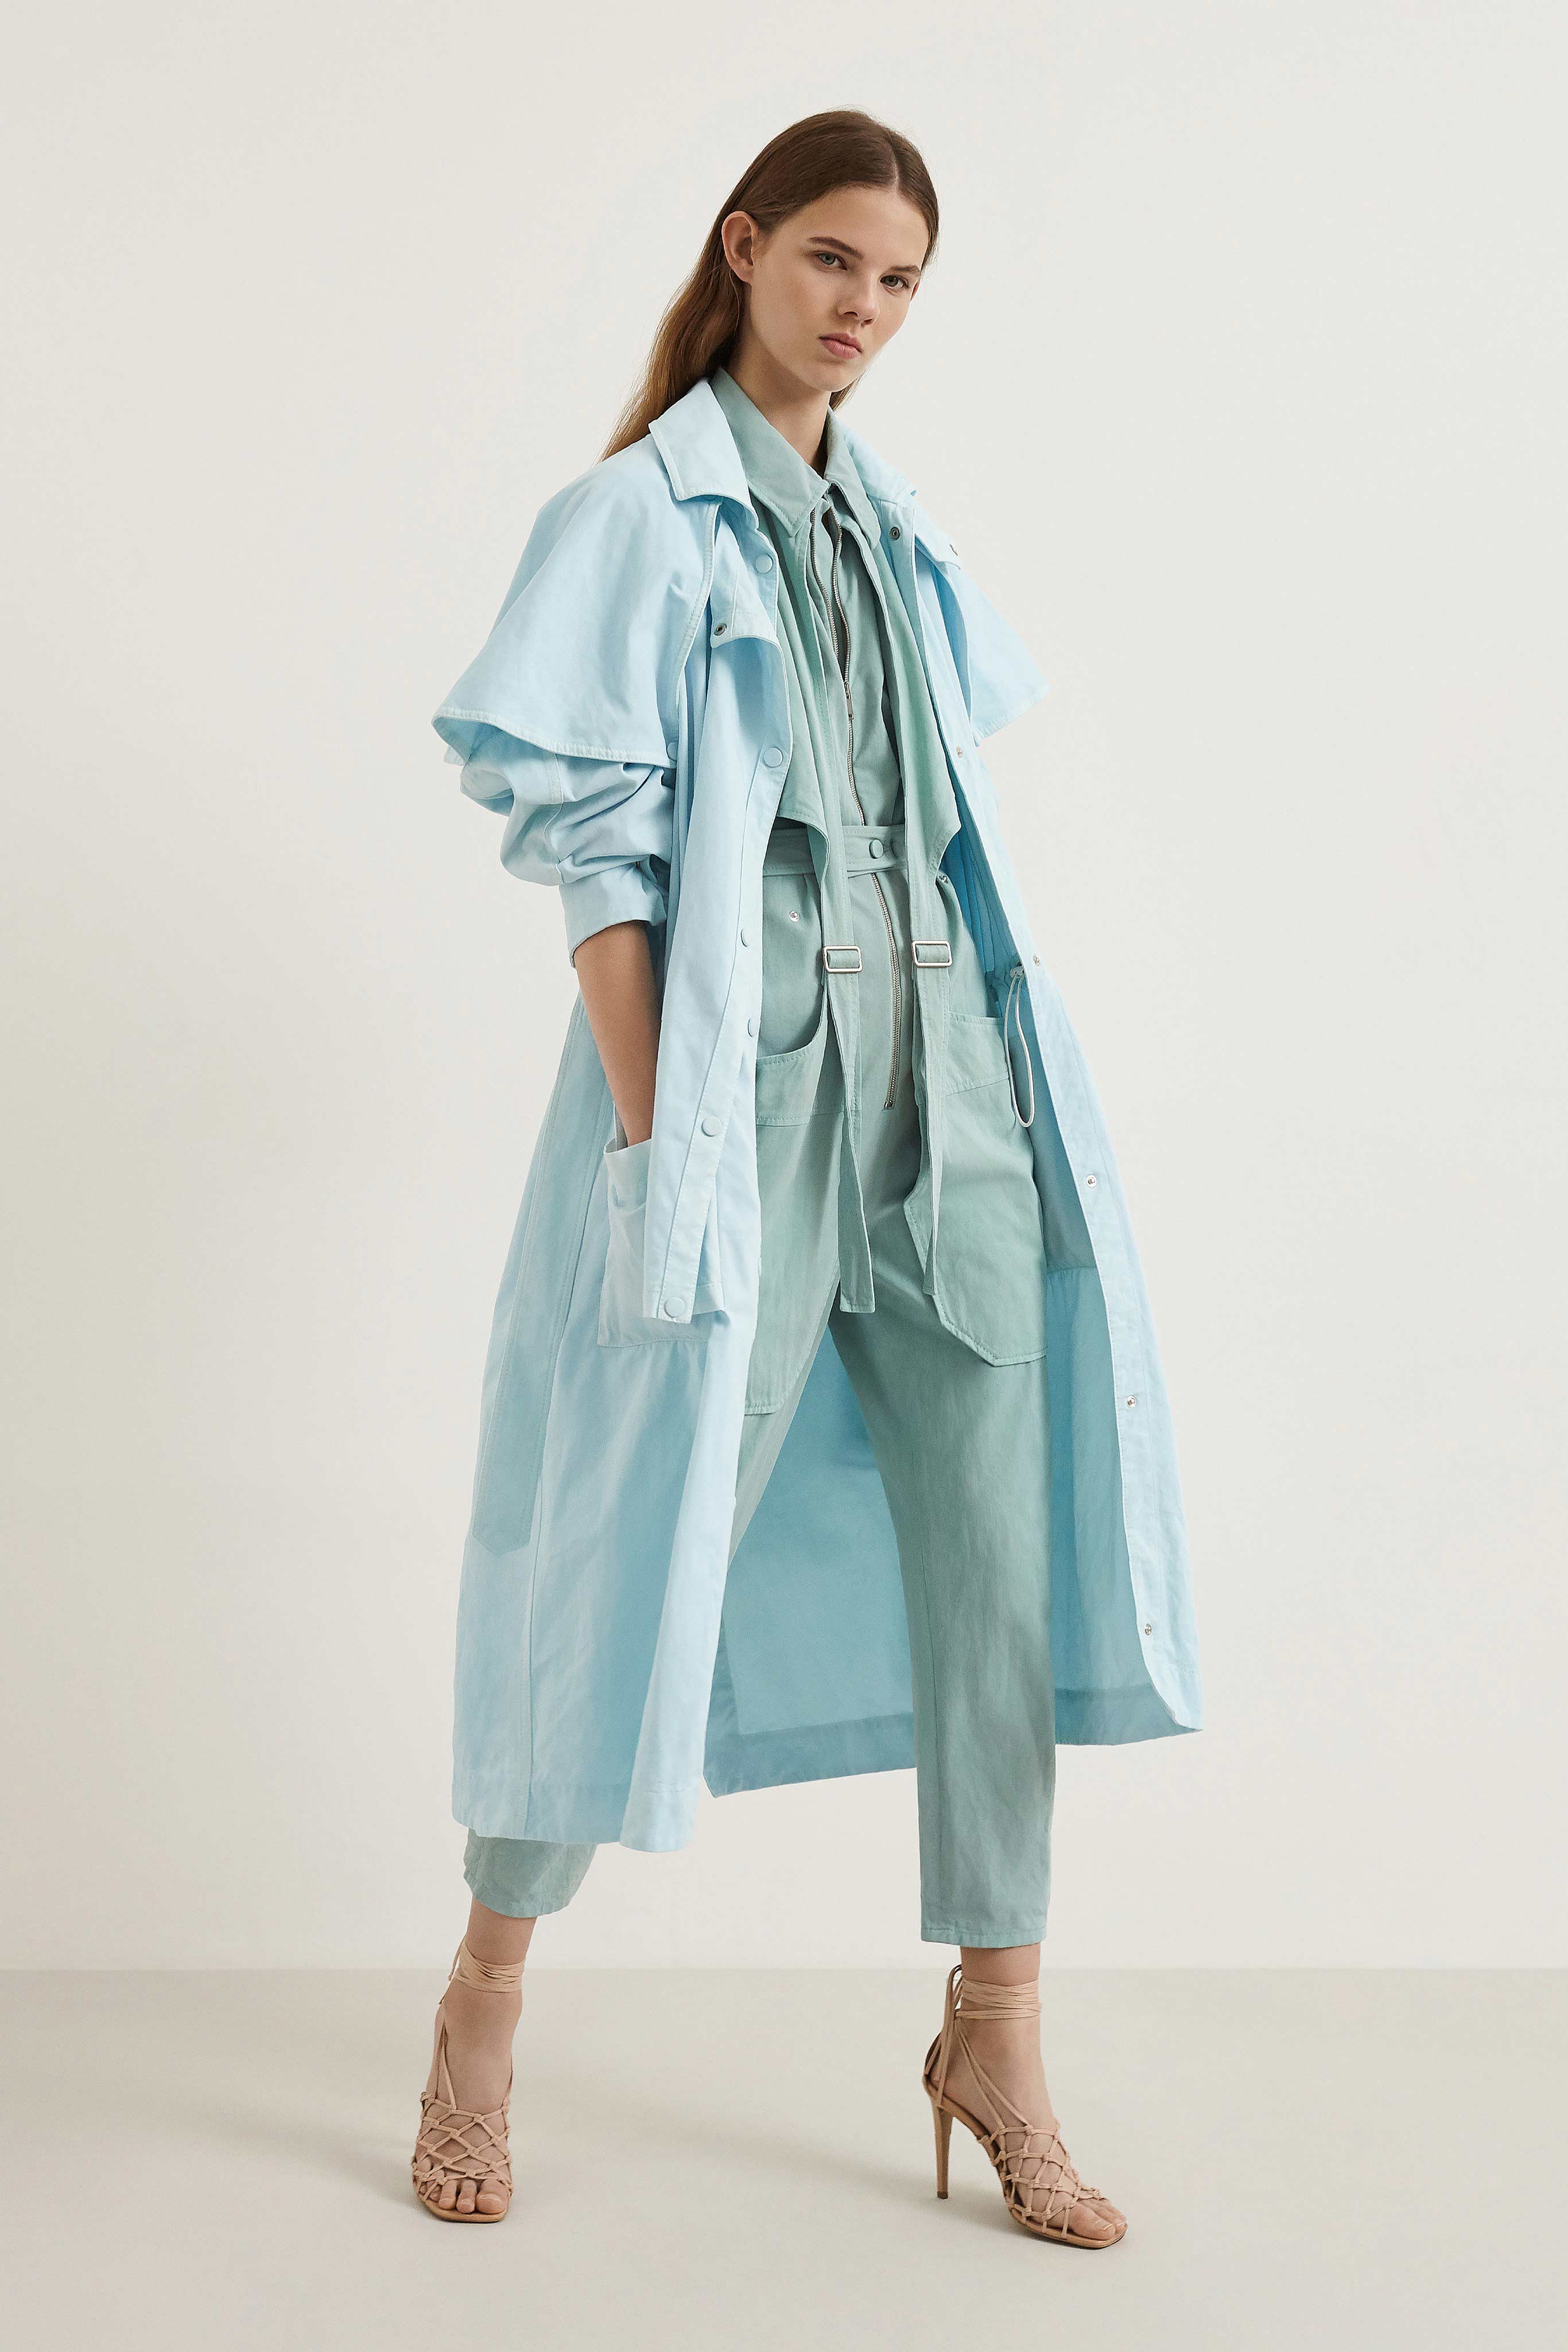 Stella McCartney 2020 runway fashion trend report vogue parachute